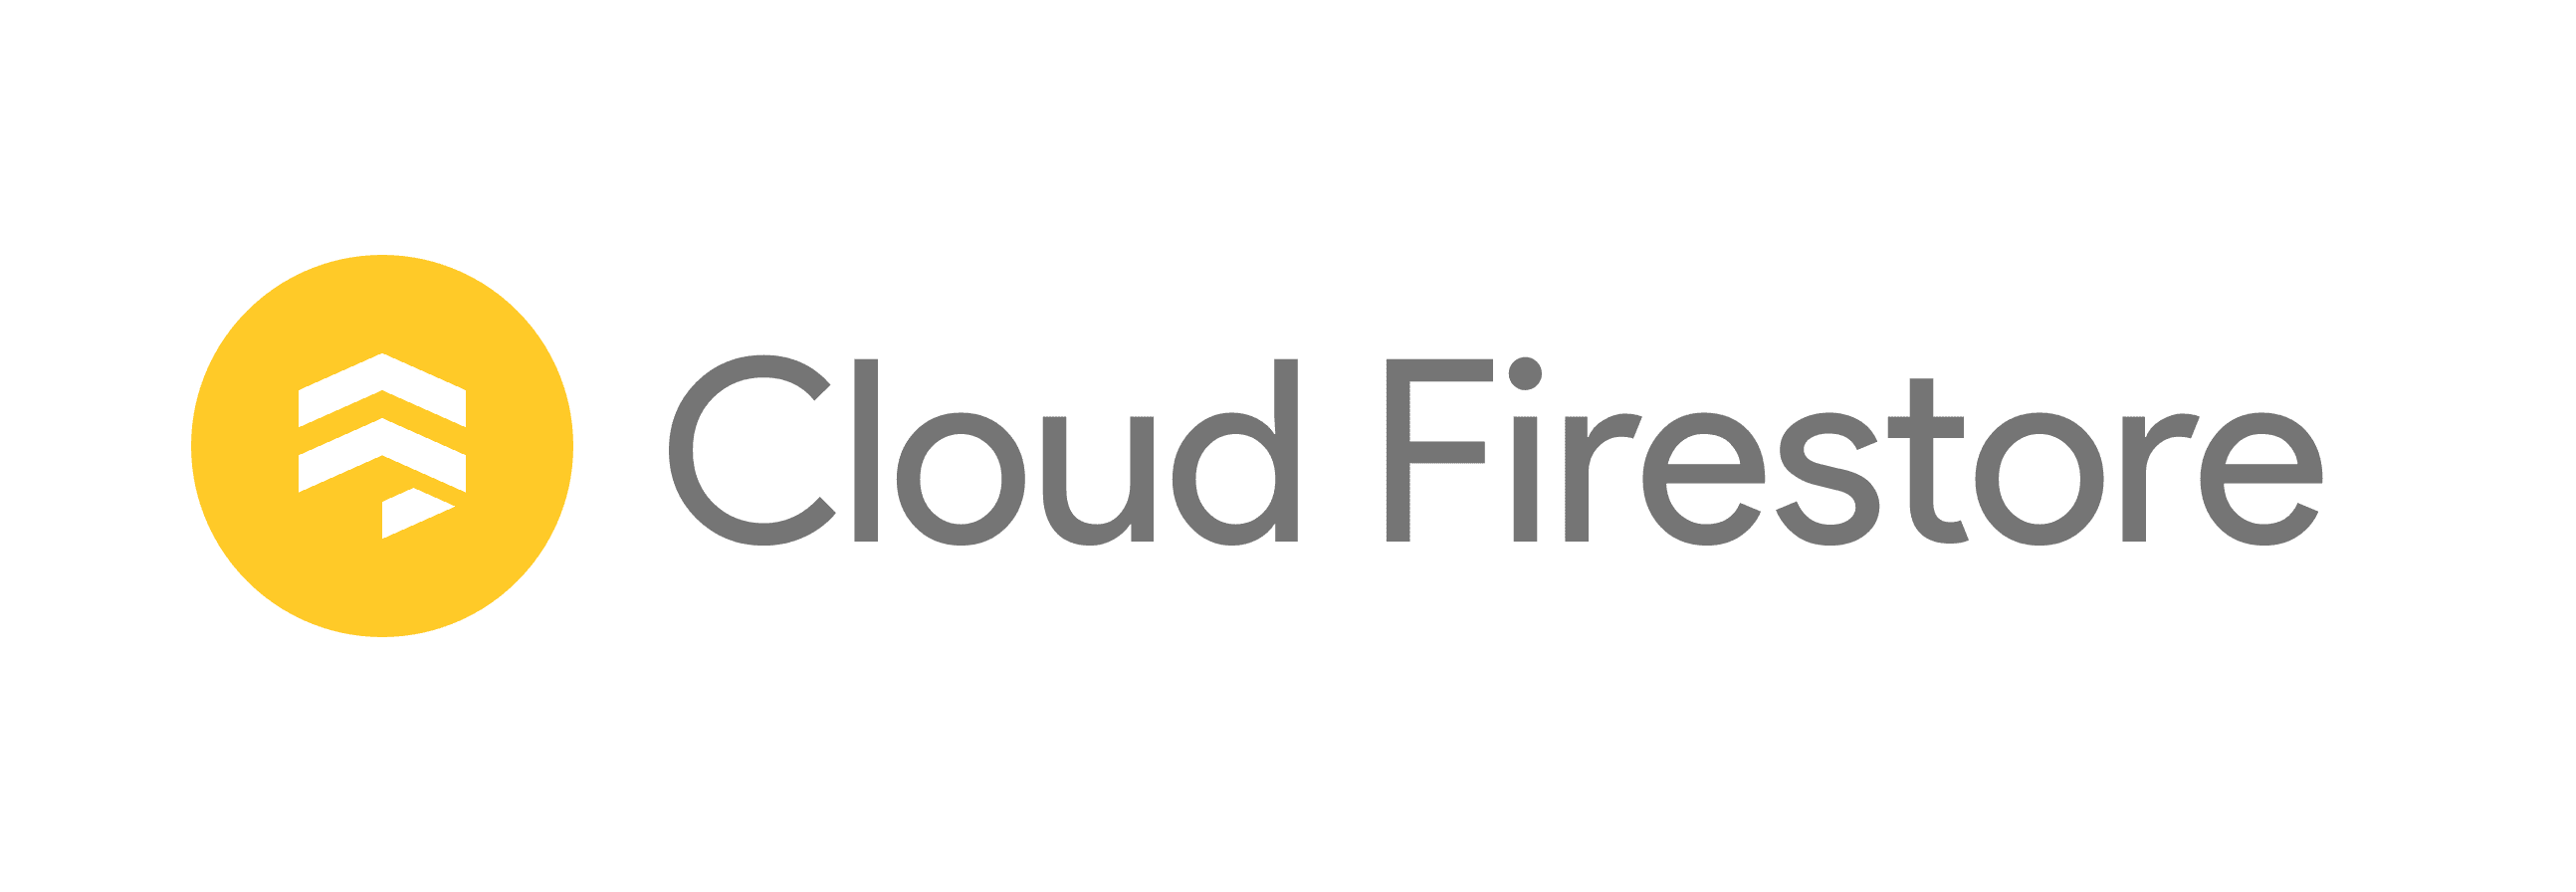 Cloud Firestore.png